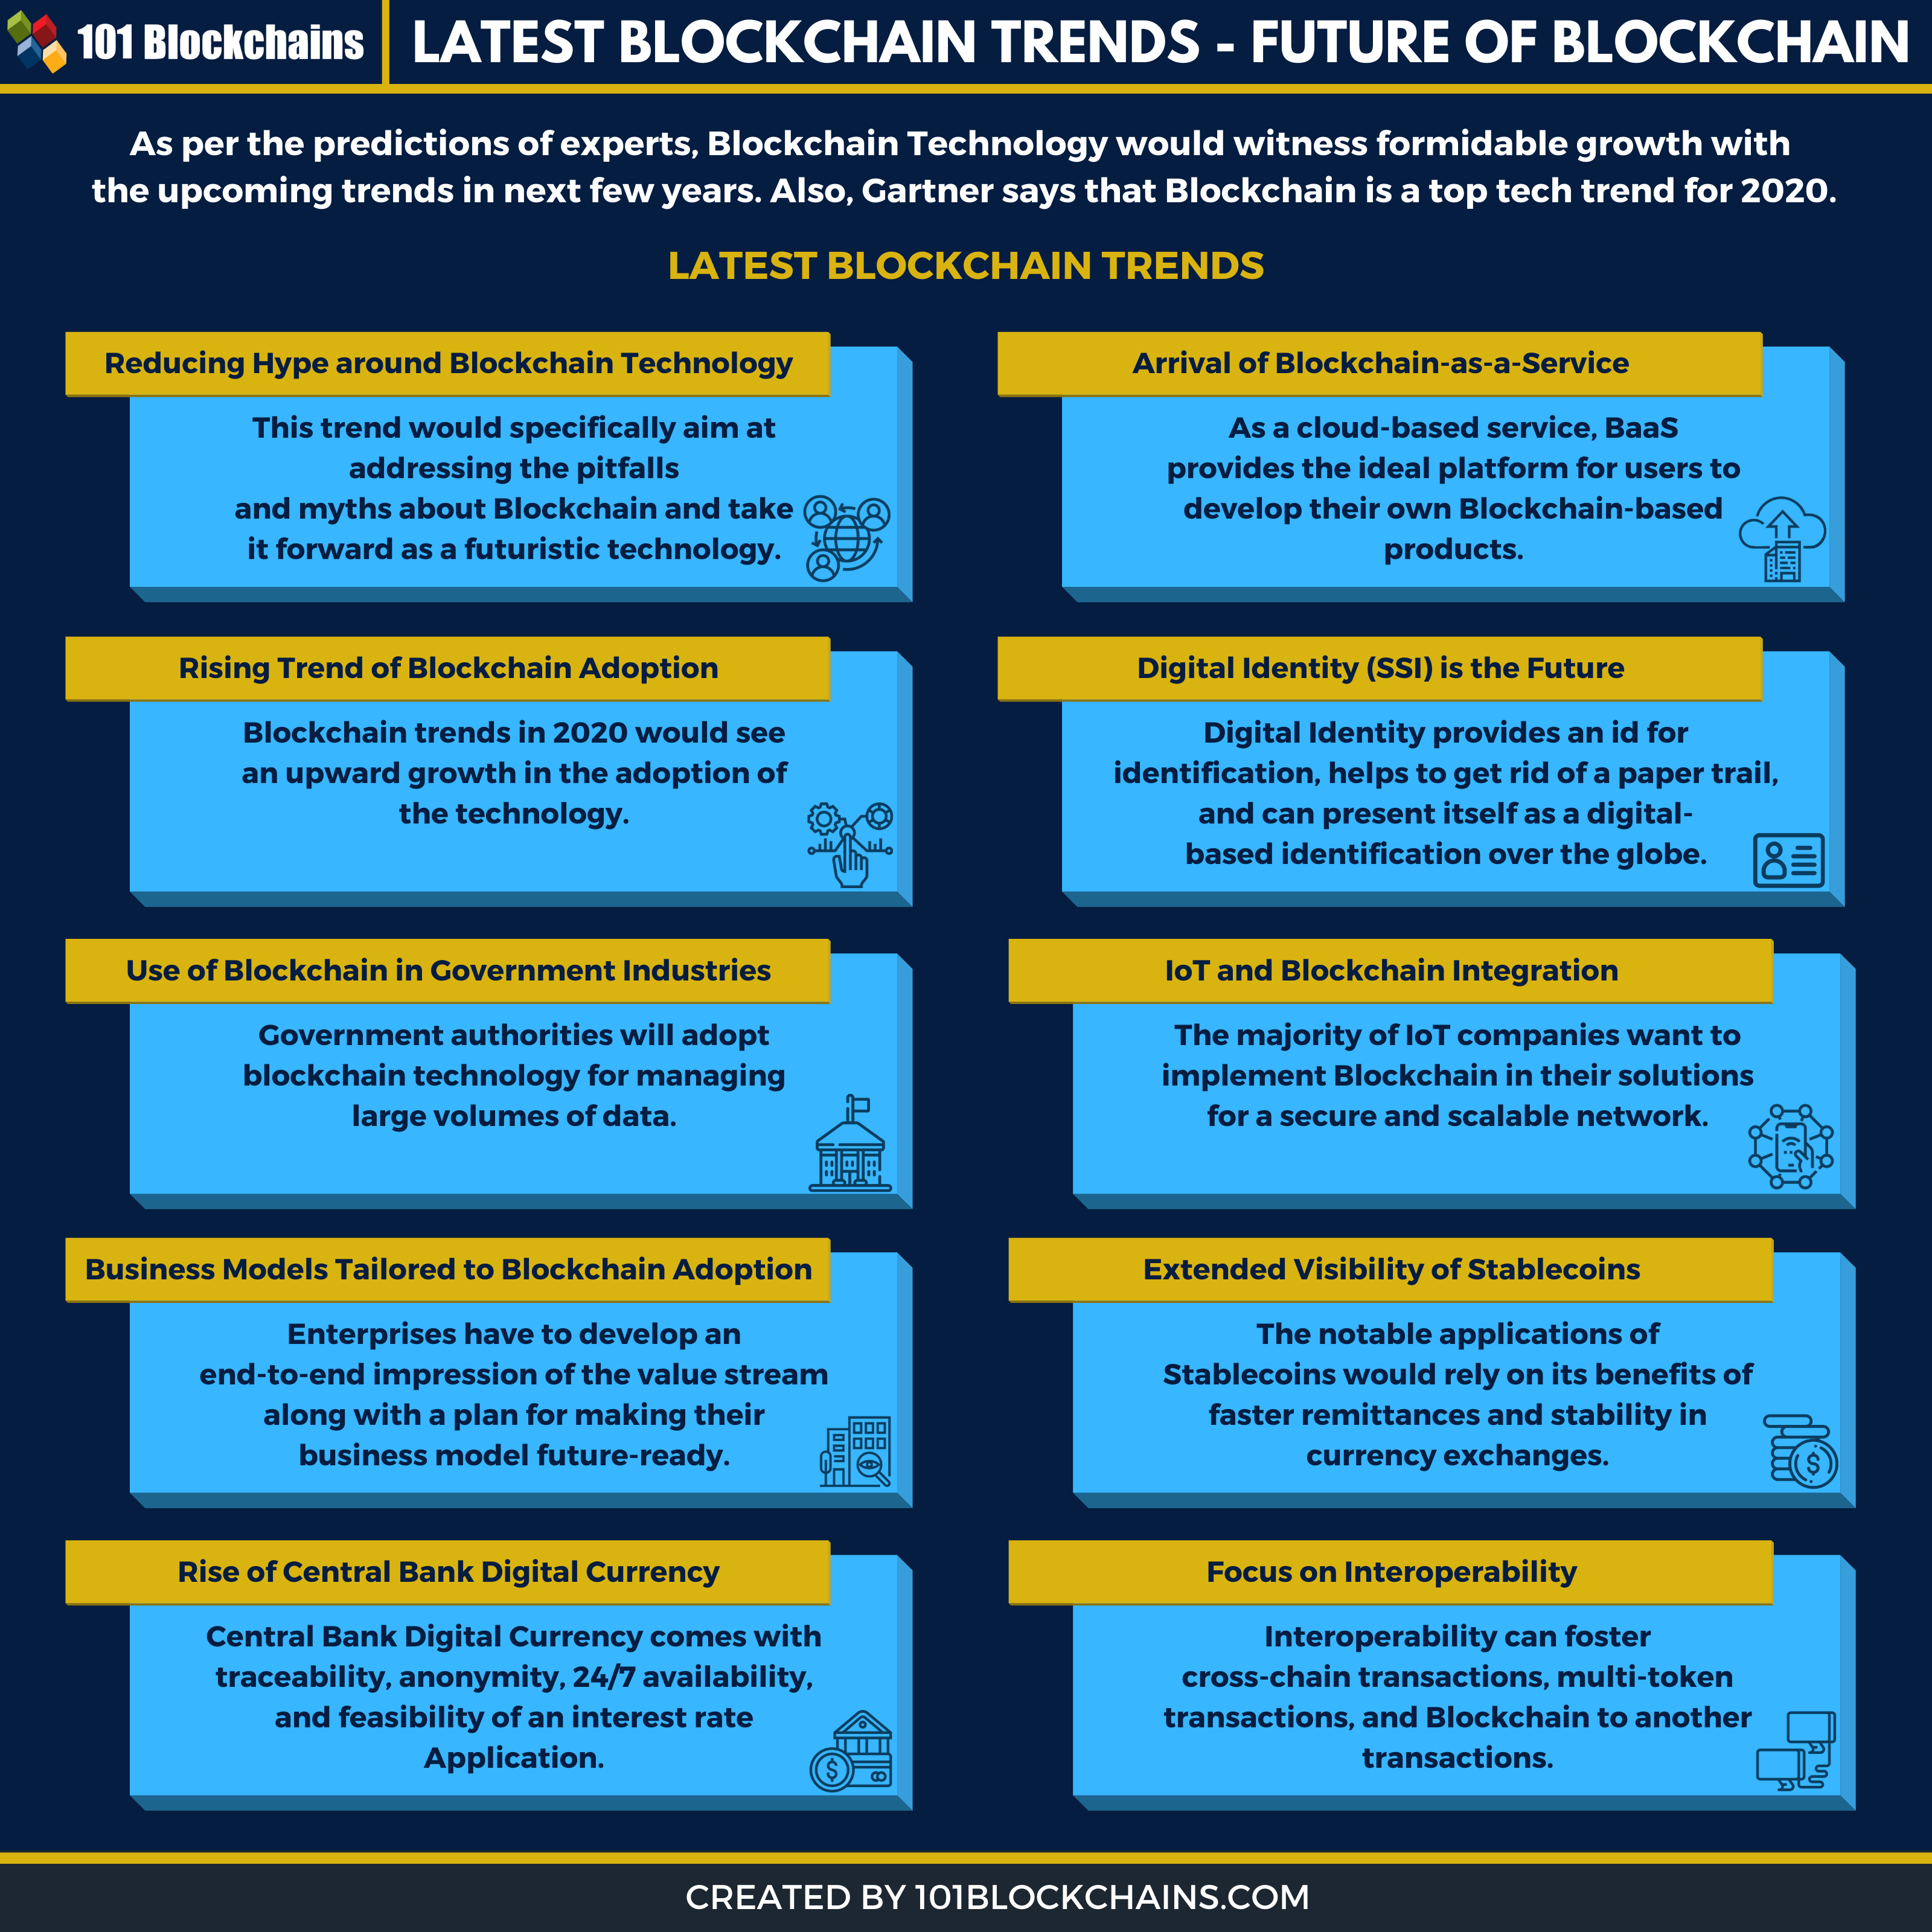 Blockchain Trends